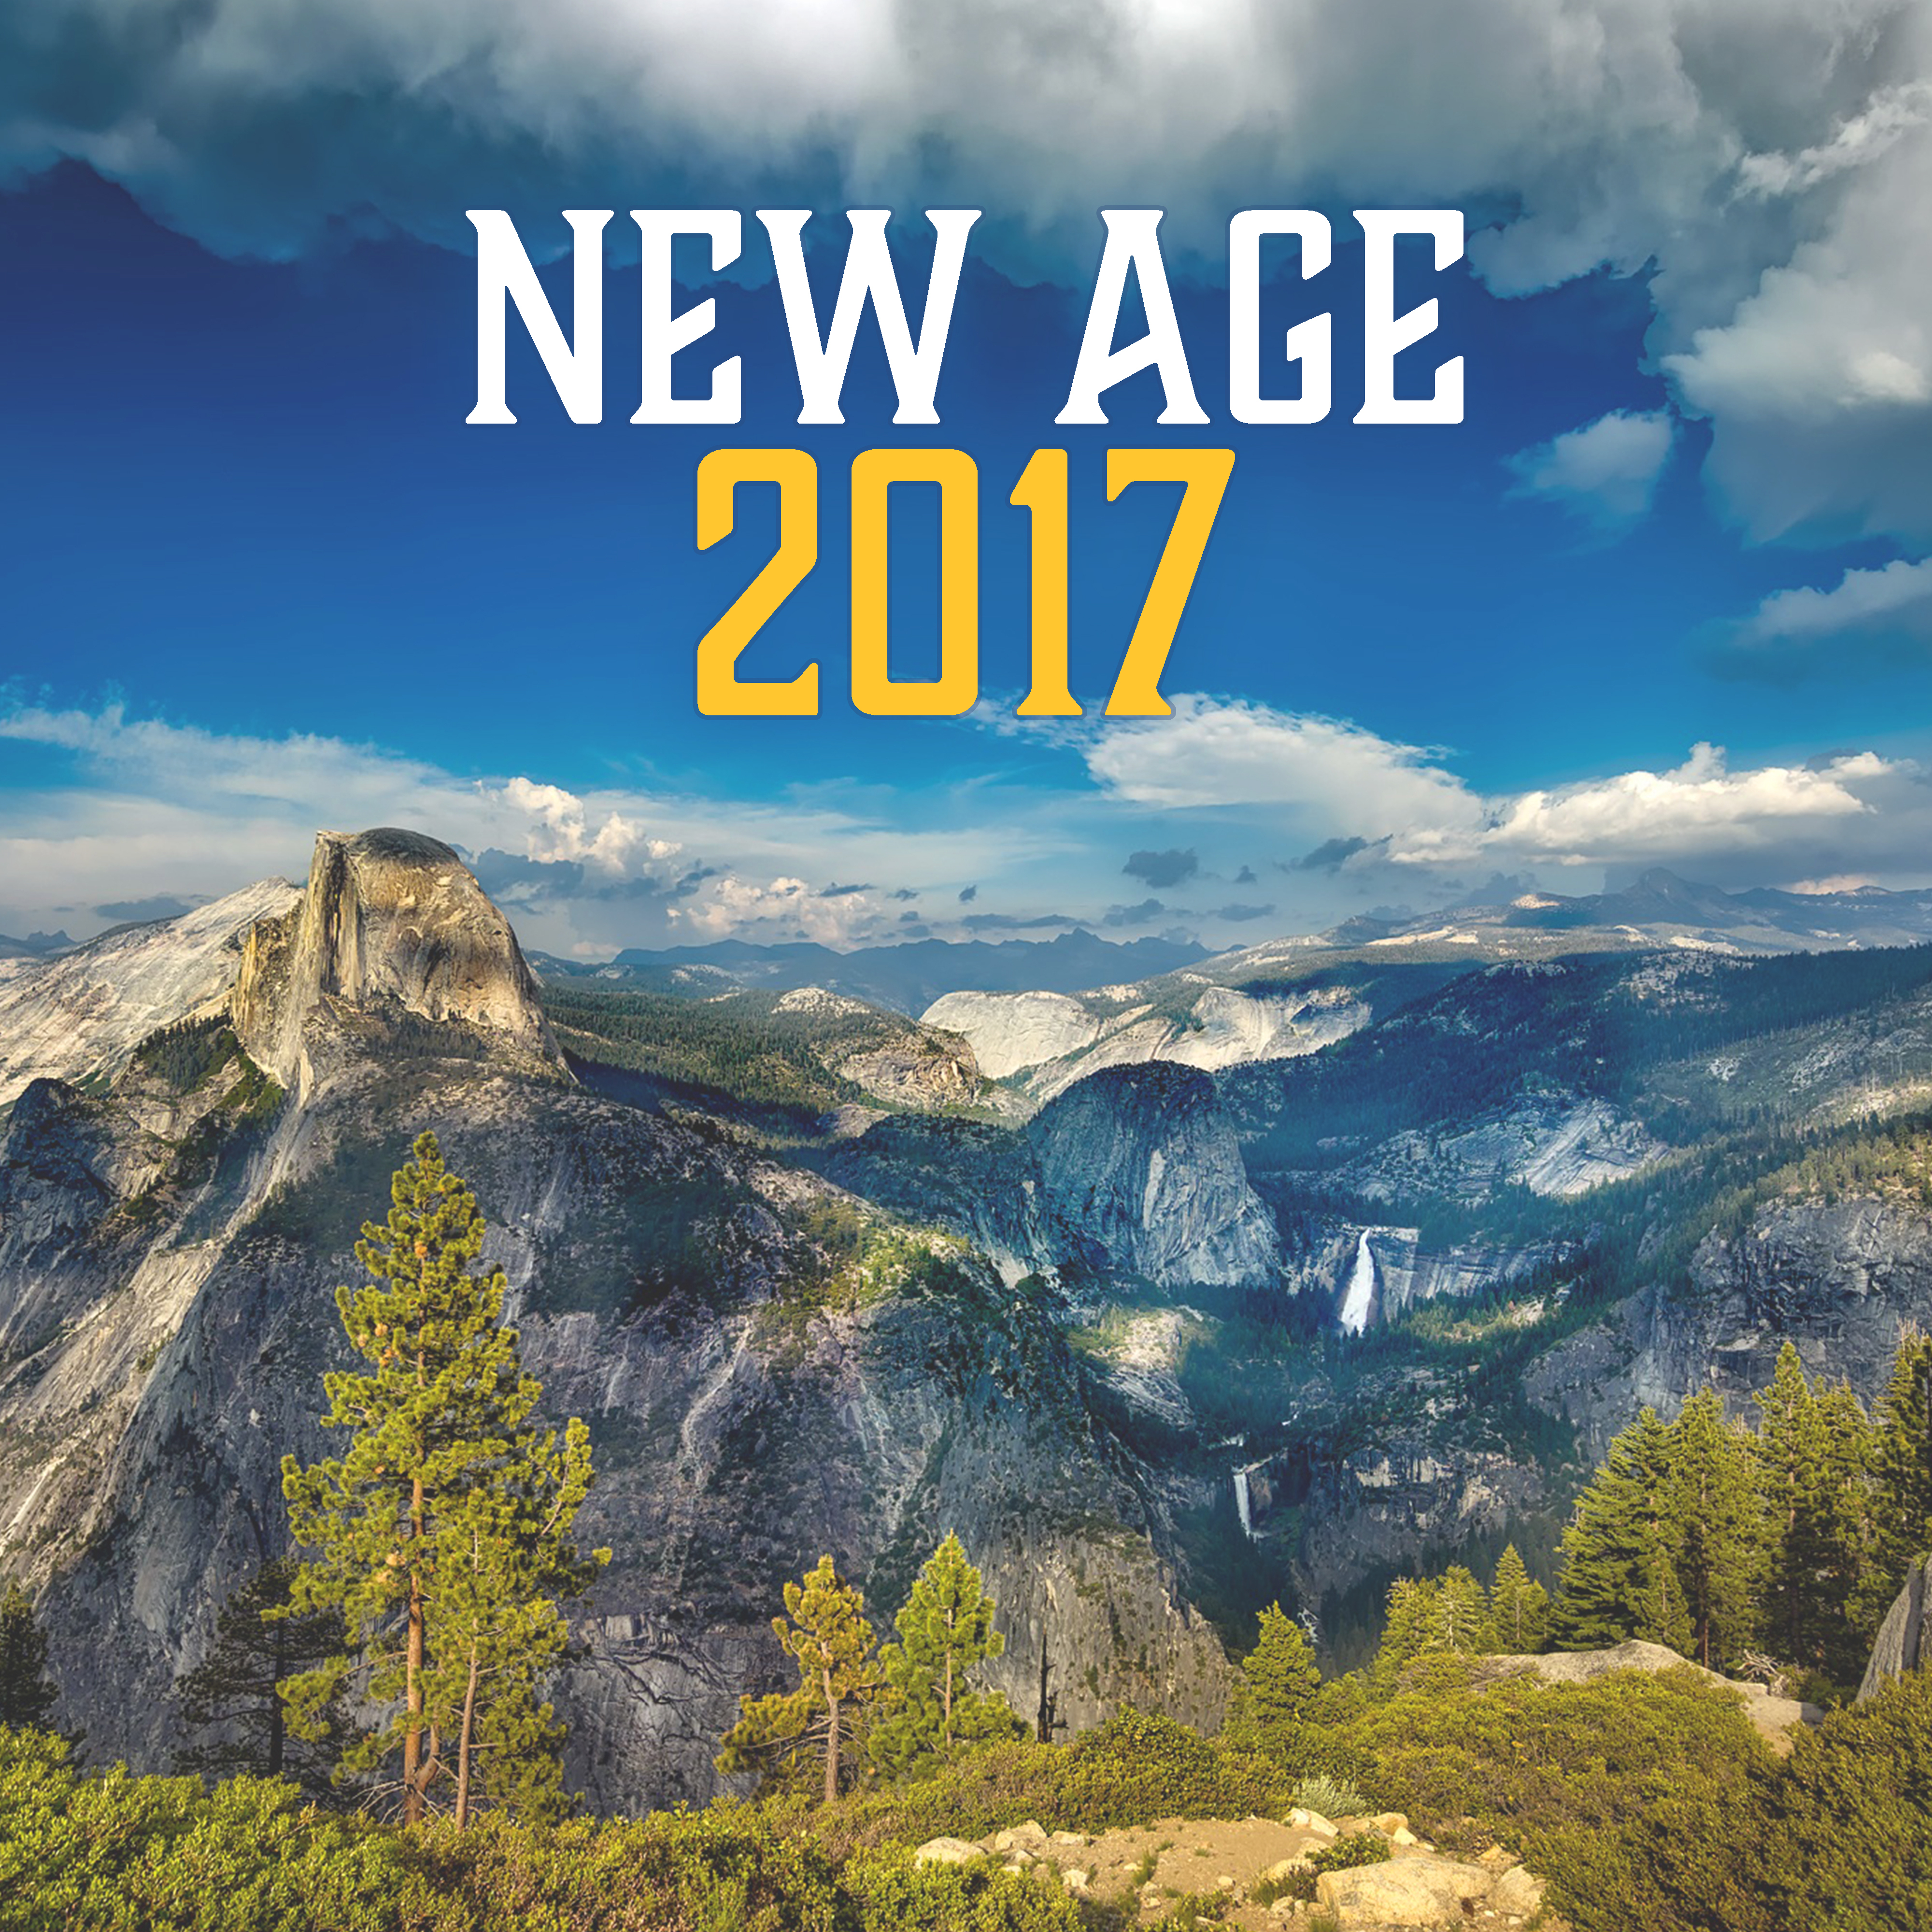 New Age 2017  Nature Sounds, Relaxing Music, Zen, Relaxation, Massage, Meditation, Bliss, Calming Music